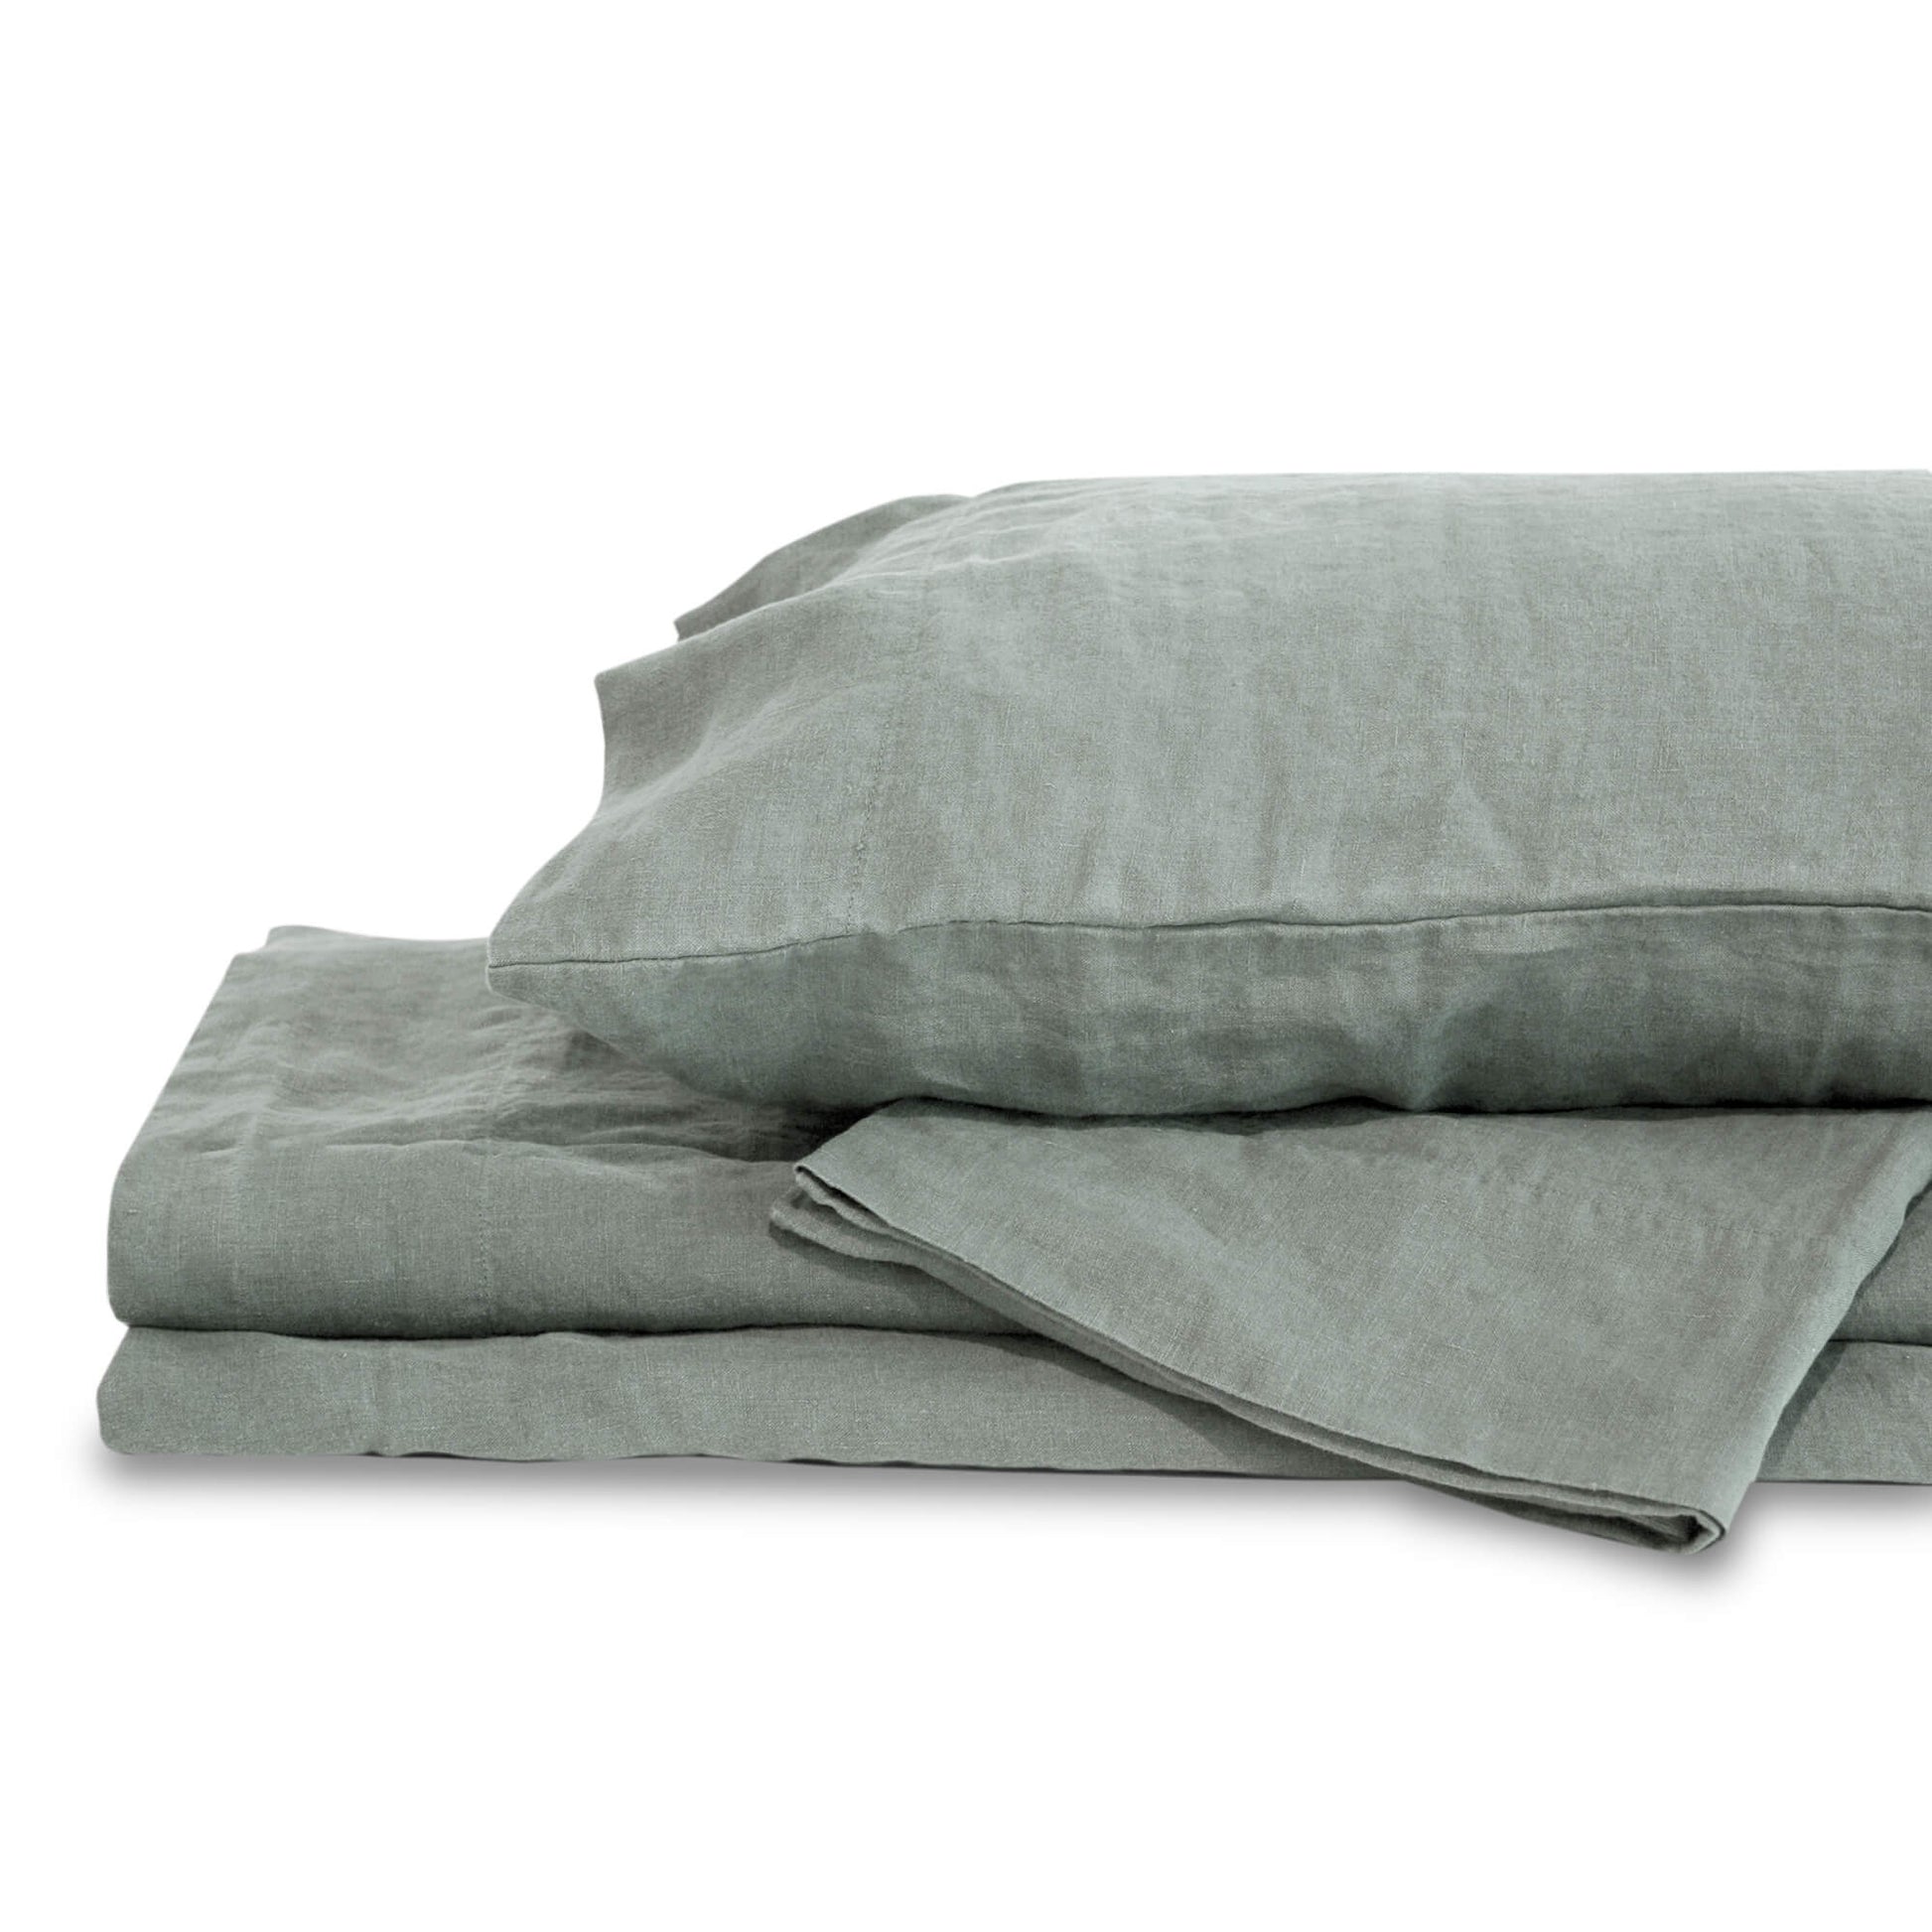 Delilah Home 100% Hemp Bed Sheets
Jungle Pillows